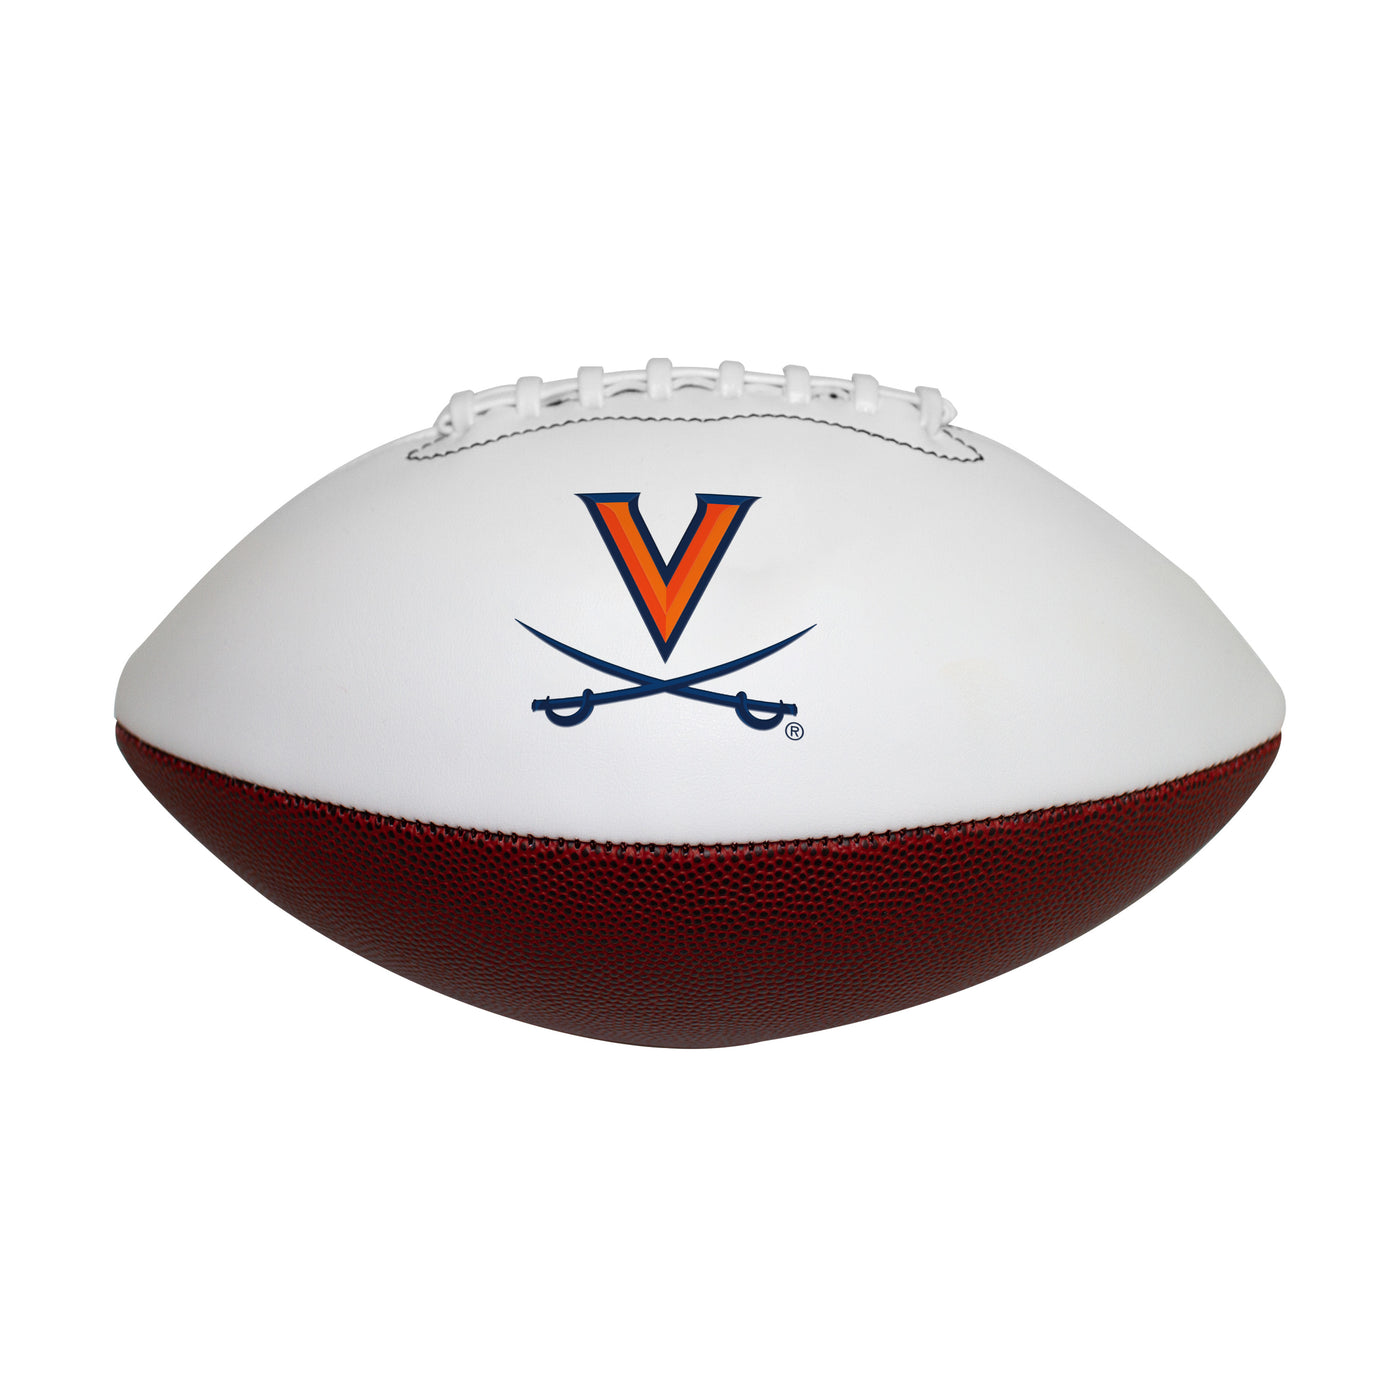 Virginia Official-Size Autograph Football